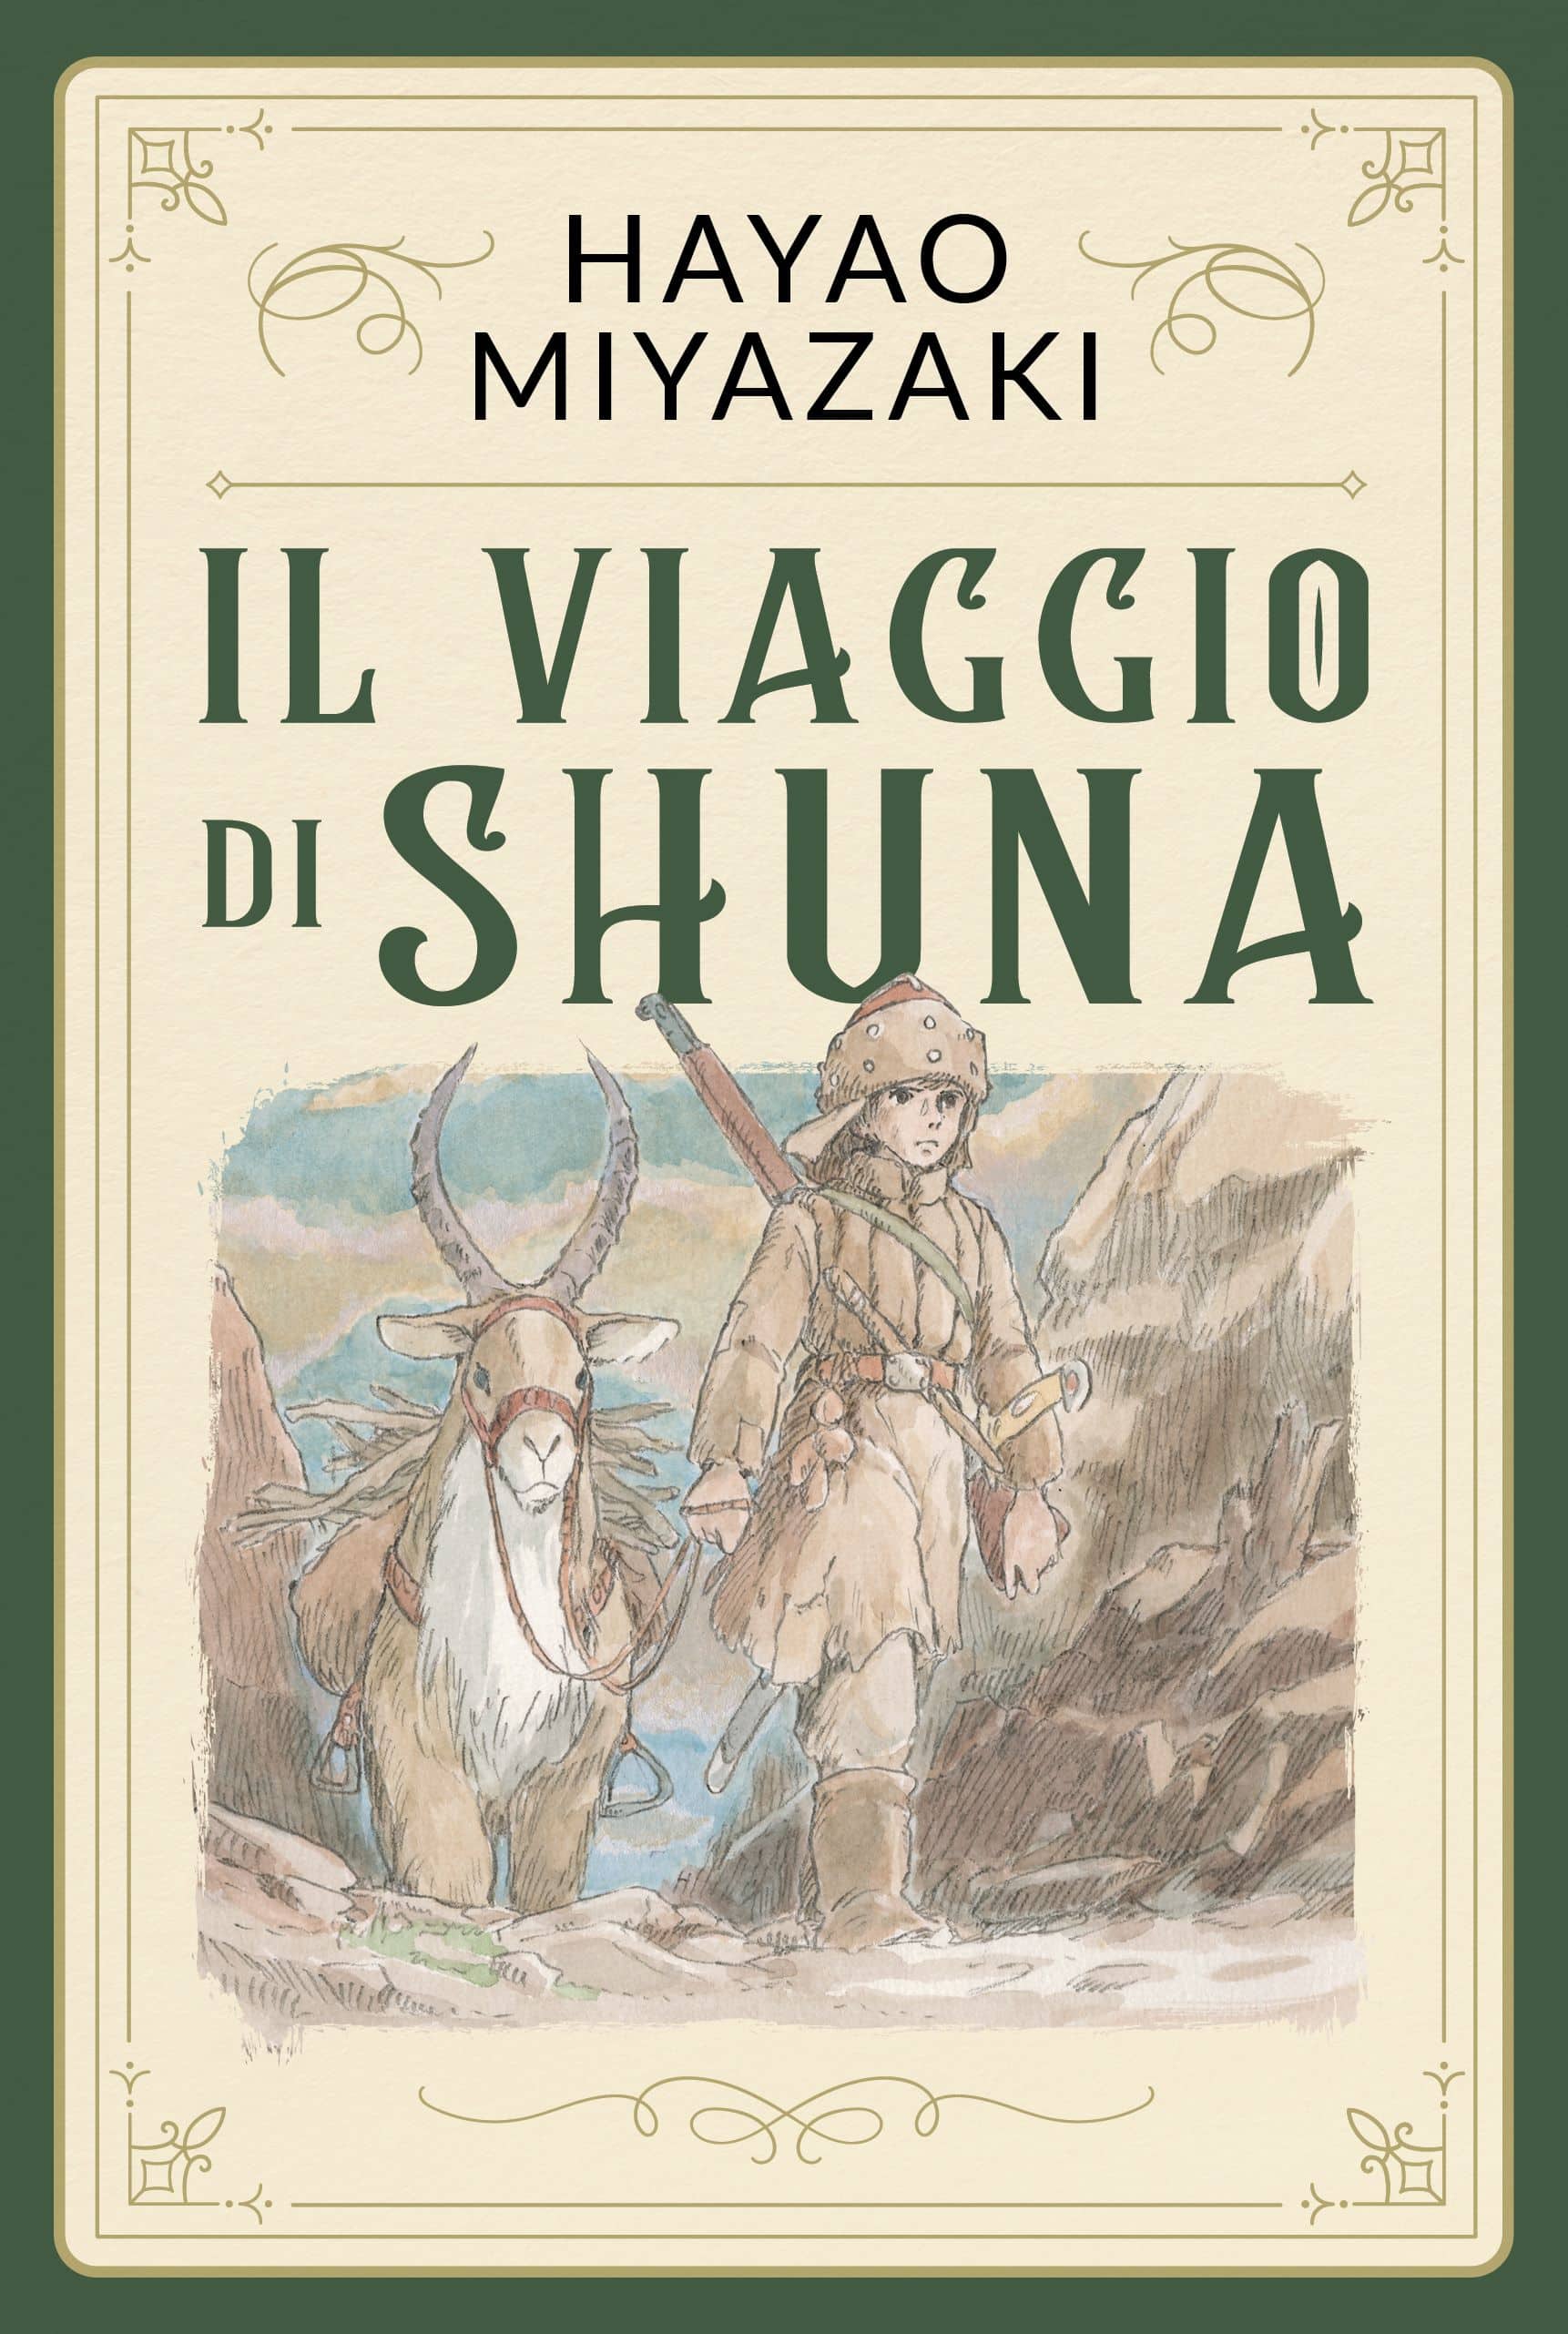 Hayao Miyazaki, Il Viaggio di Shuna, BAO Publishing, cartonato, 152 pagine a colori, 23 euro